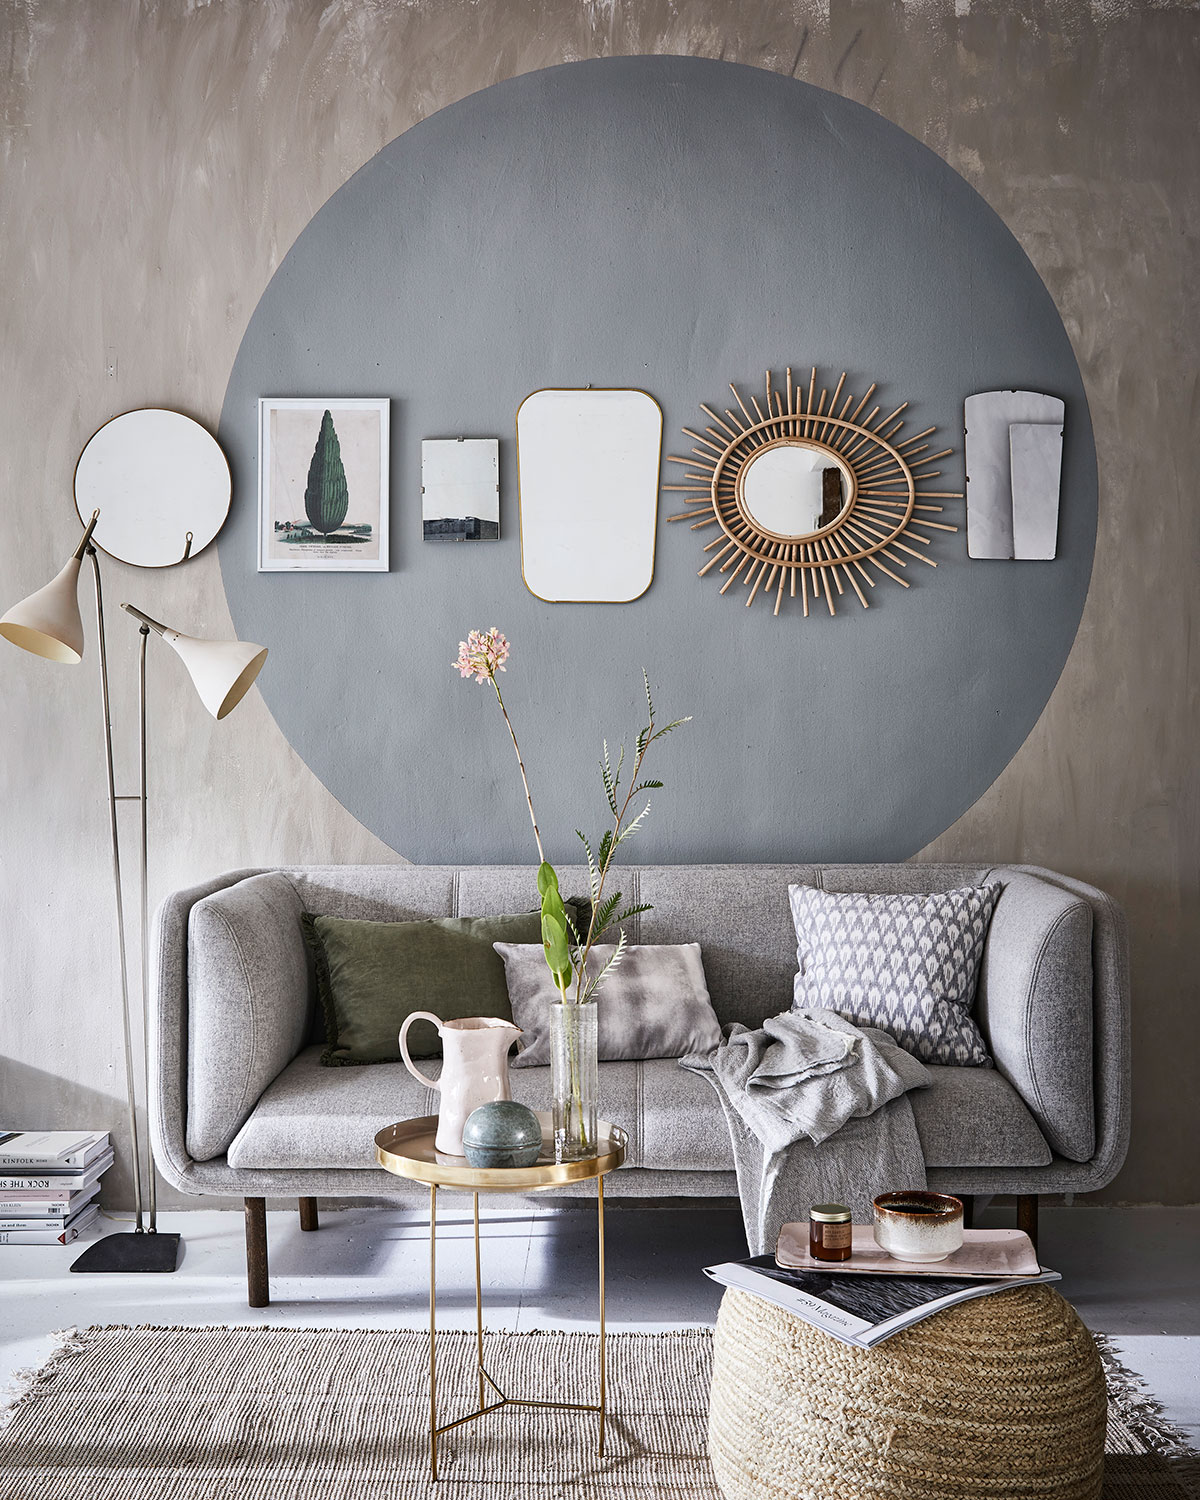 Sala com pintura circular e decorada com tons de cinza.